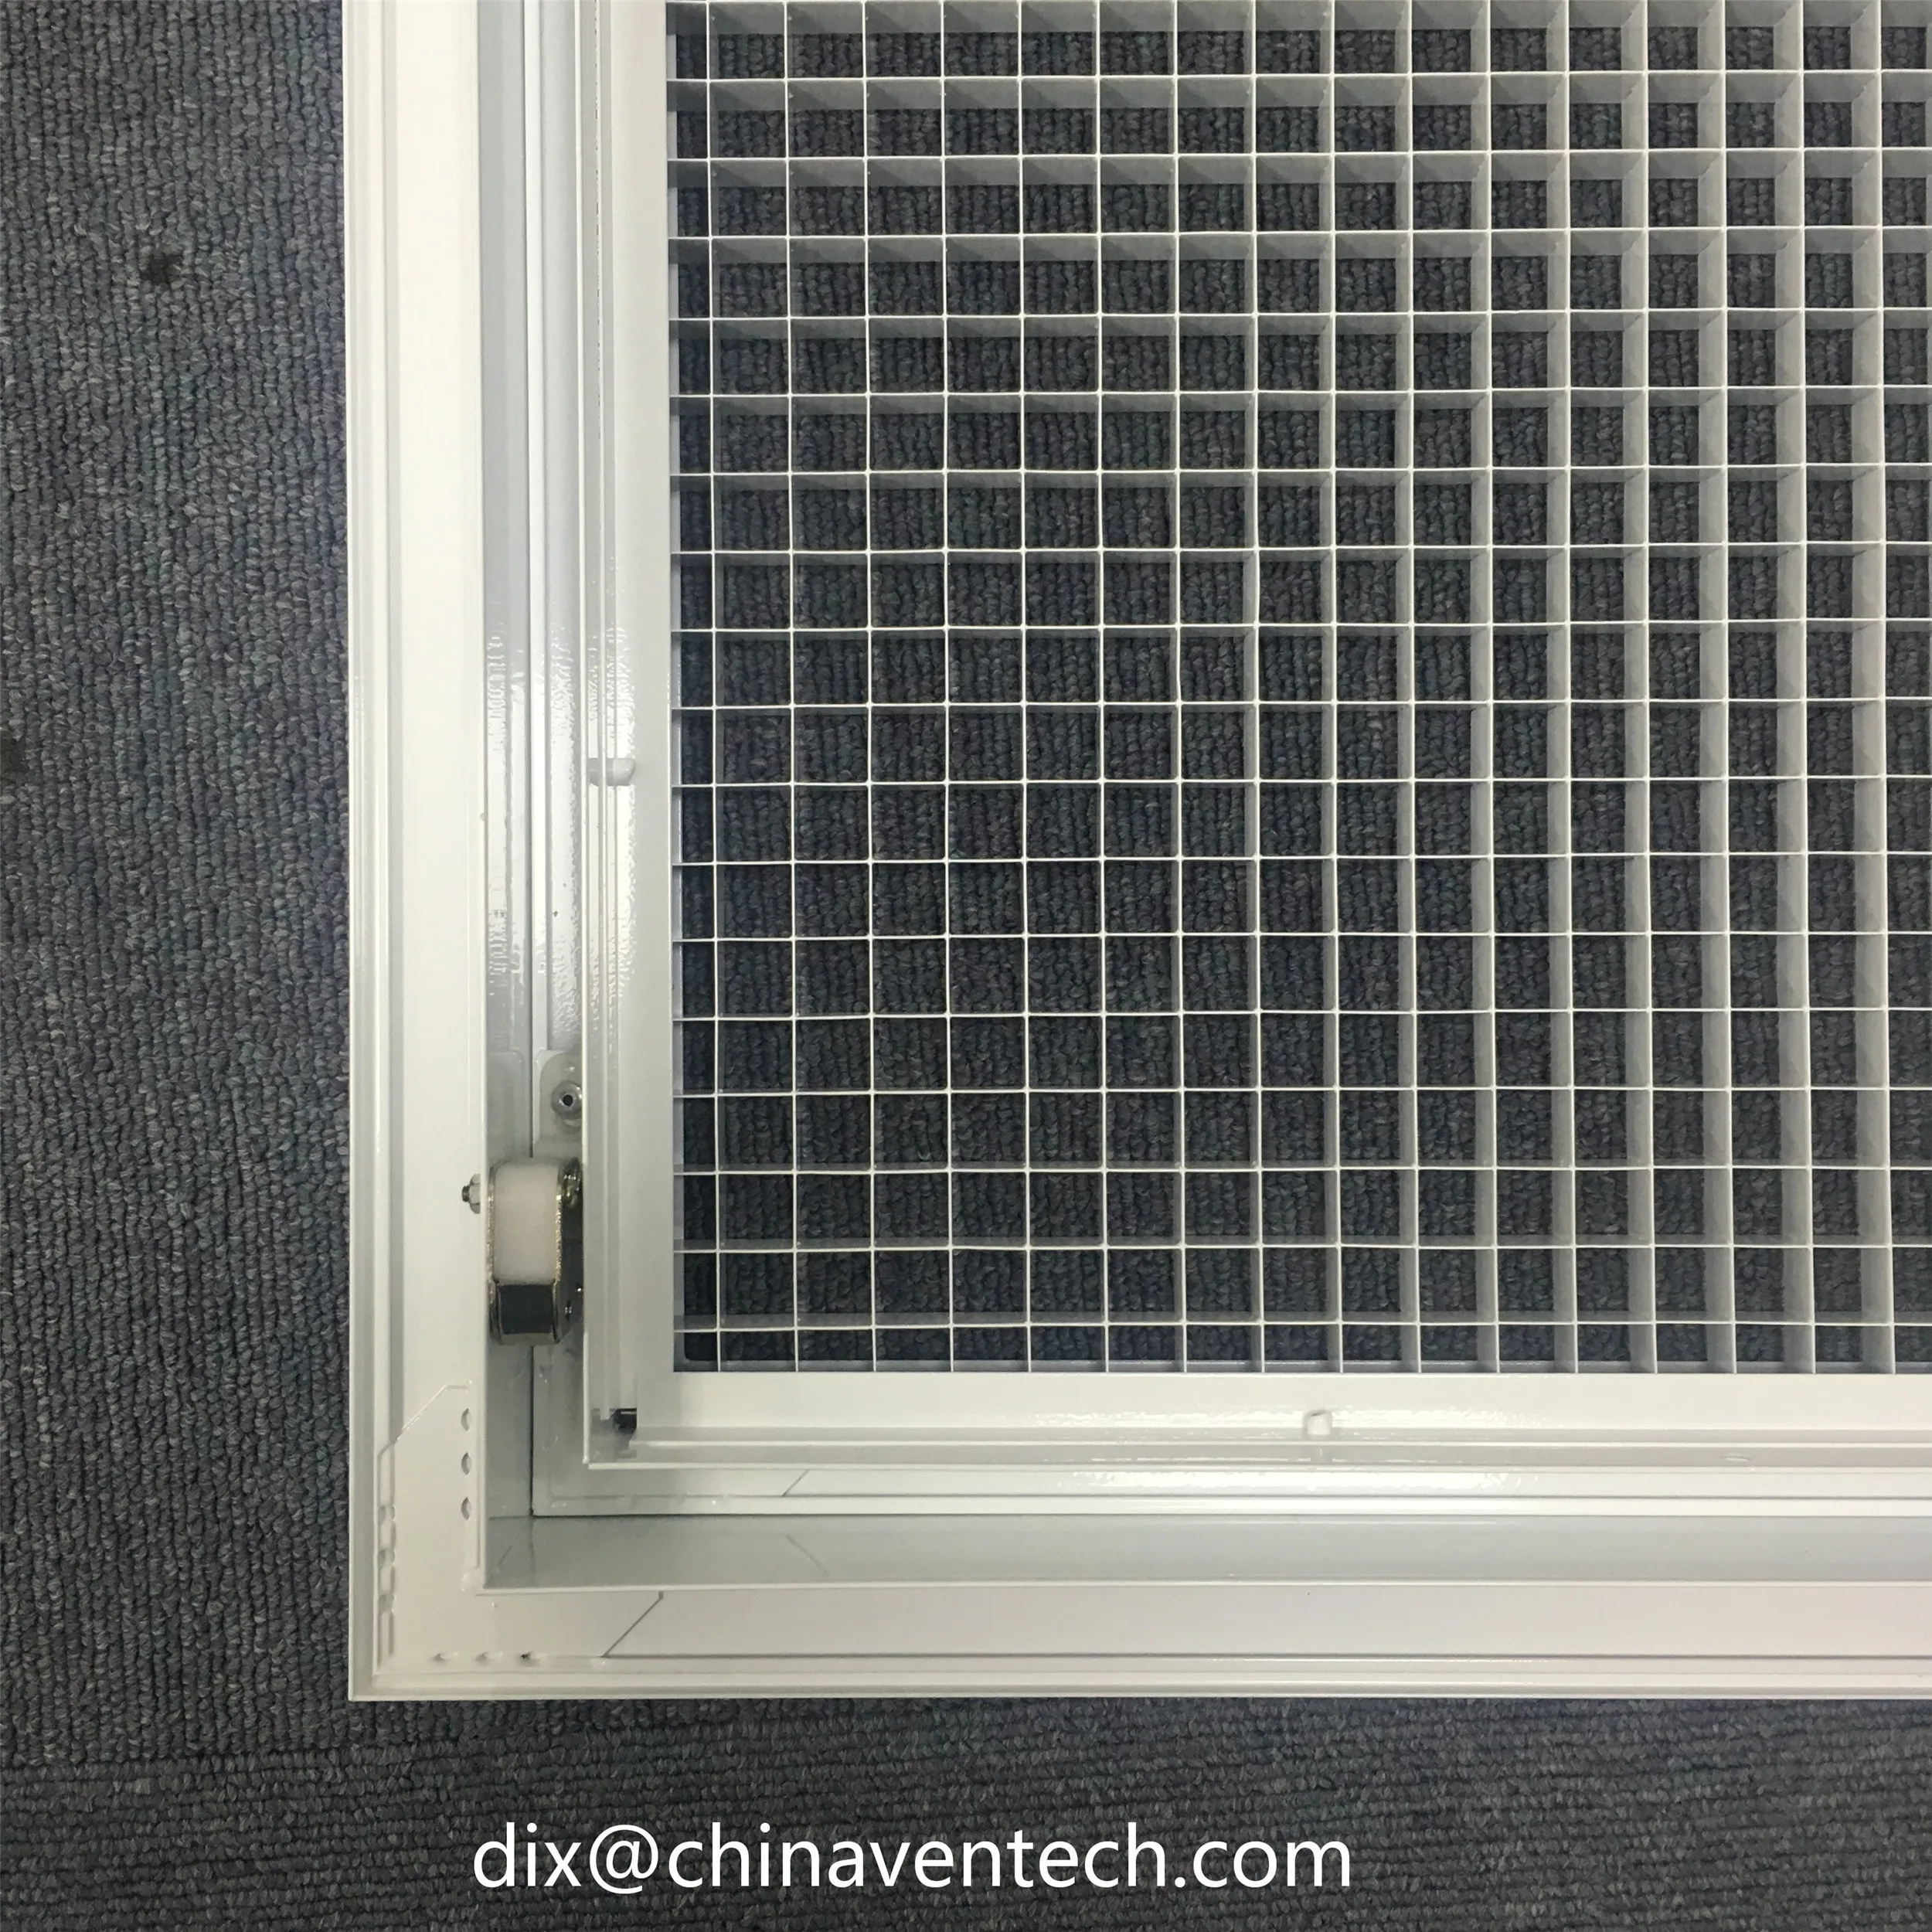 Hvac Ceiling ventilation egg crate - Registers, Grilles & Vents